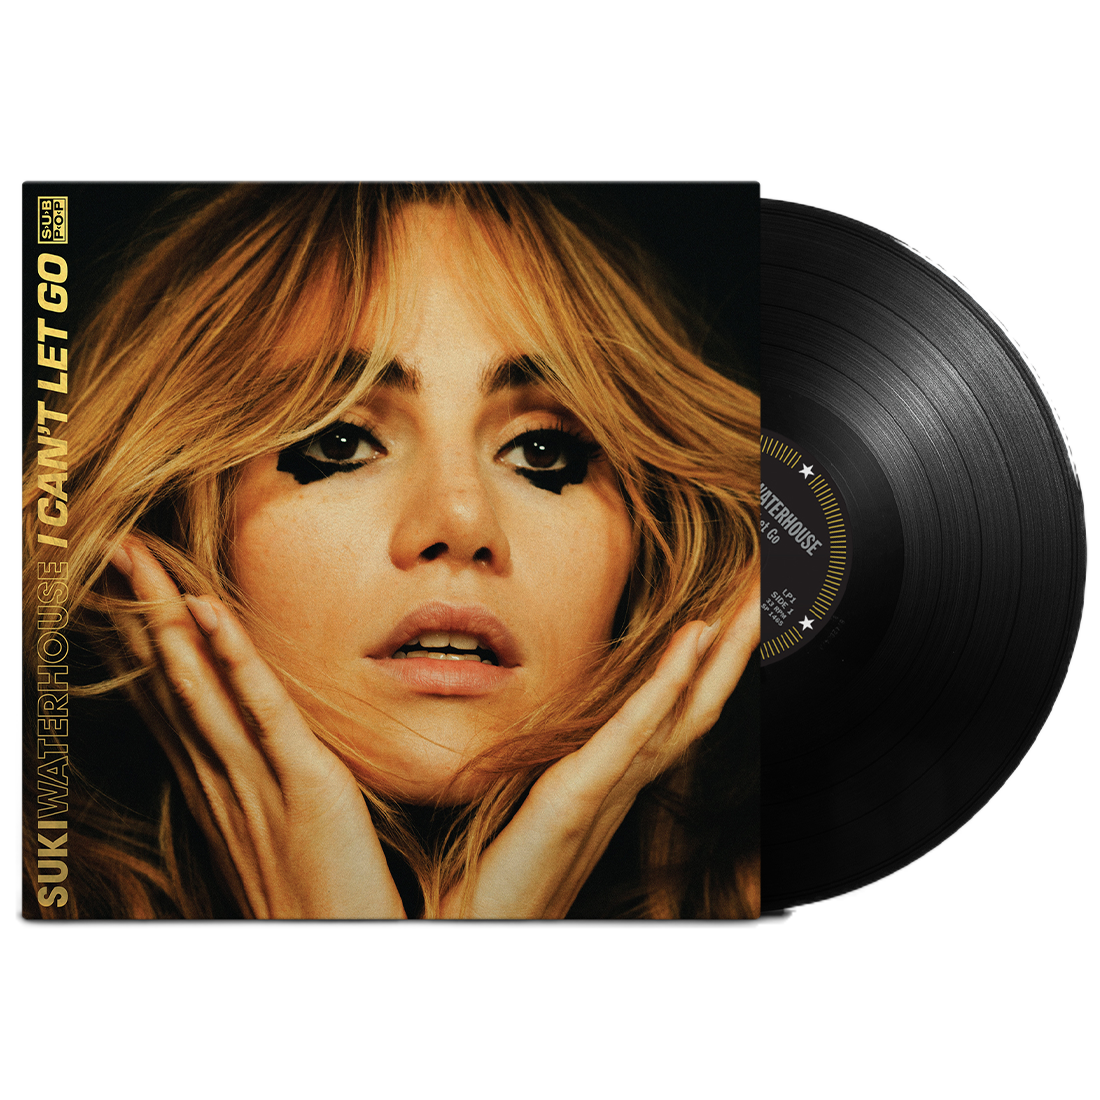 I Can't Let Go: Vinyl LP